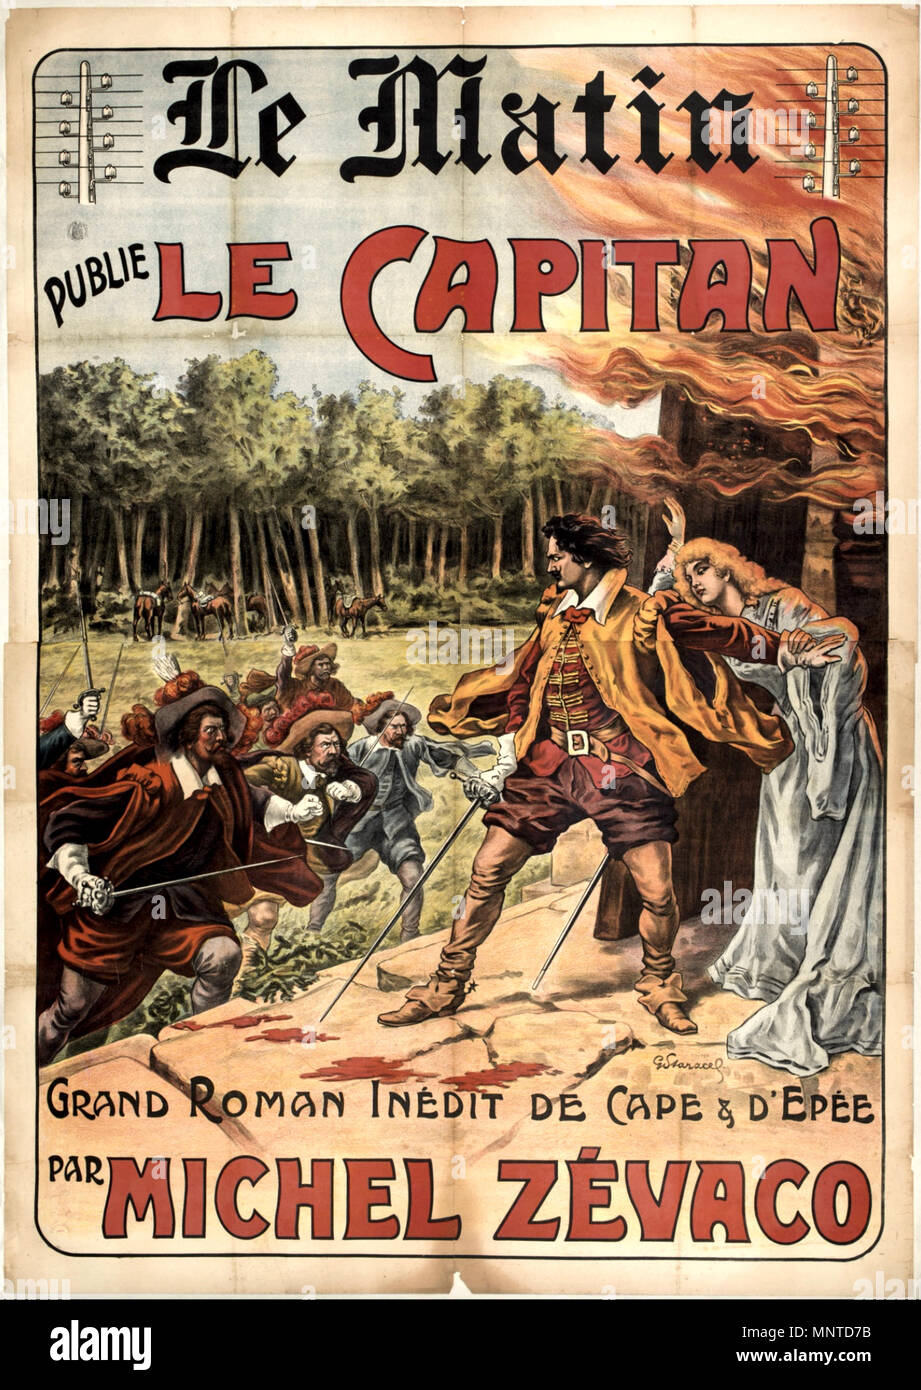 Le Capitan [roman de Michel Zévaco dans Le Matin] : [affiche].. Le Capitan,  roman de Michel Zévaco dans Le Matin : [affiche] / d'après G. Staracef.  between circa 1905 and circa 1907.